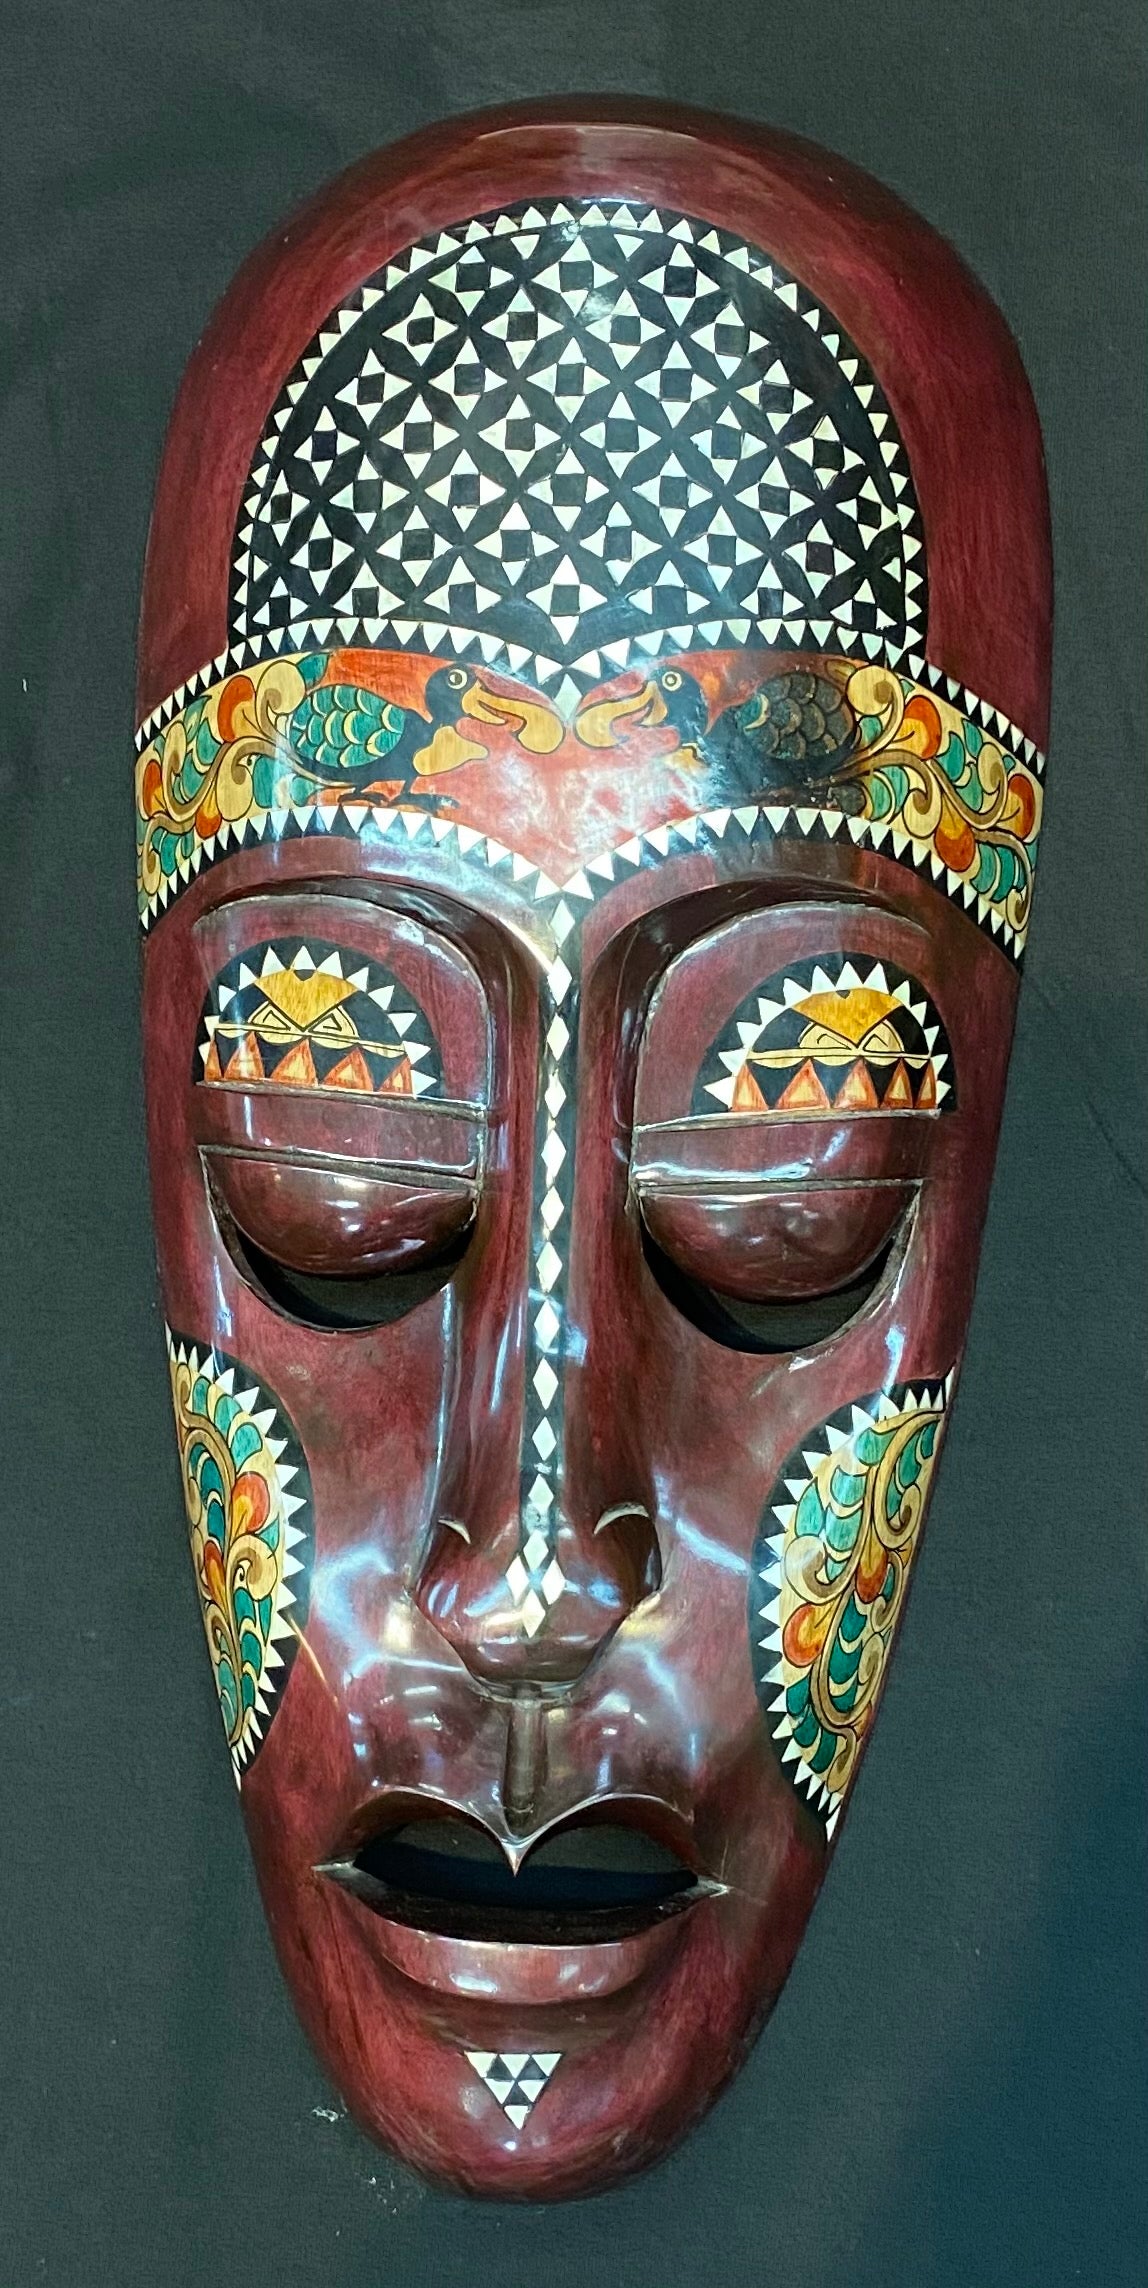 Lombok Masks